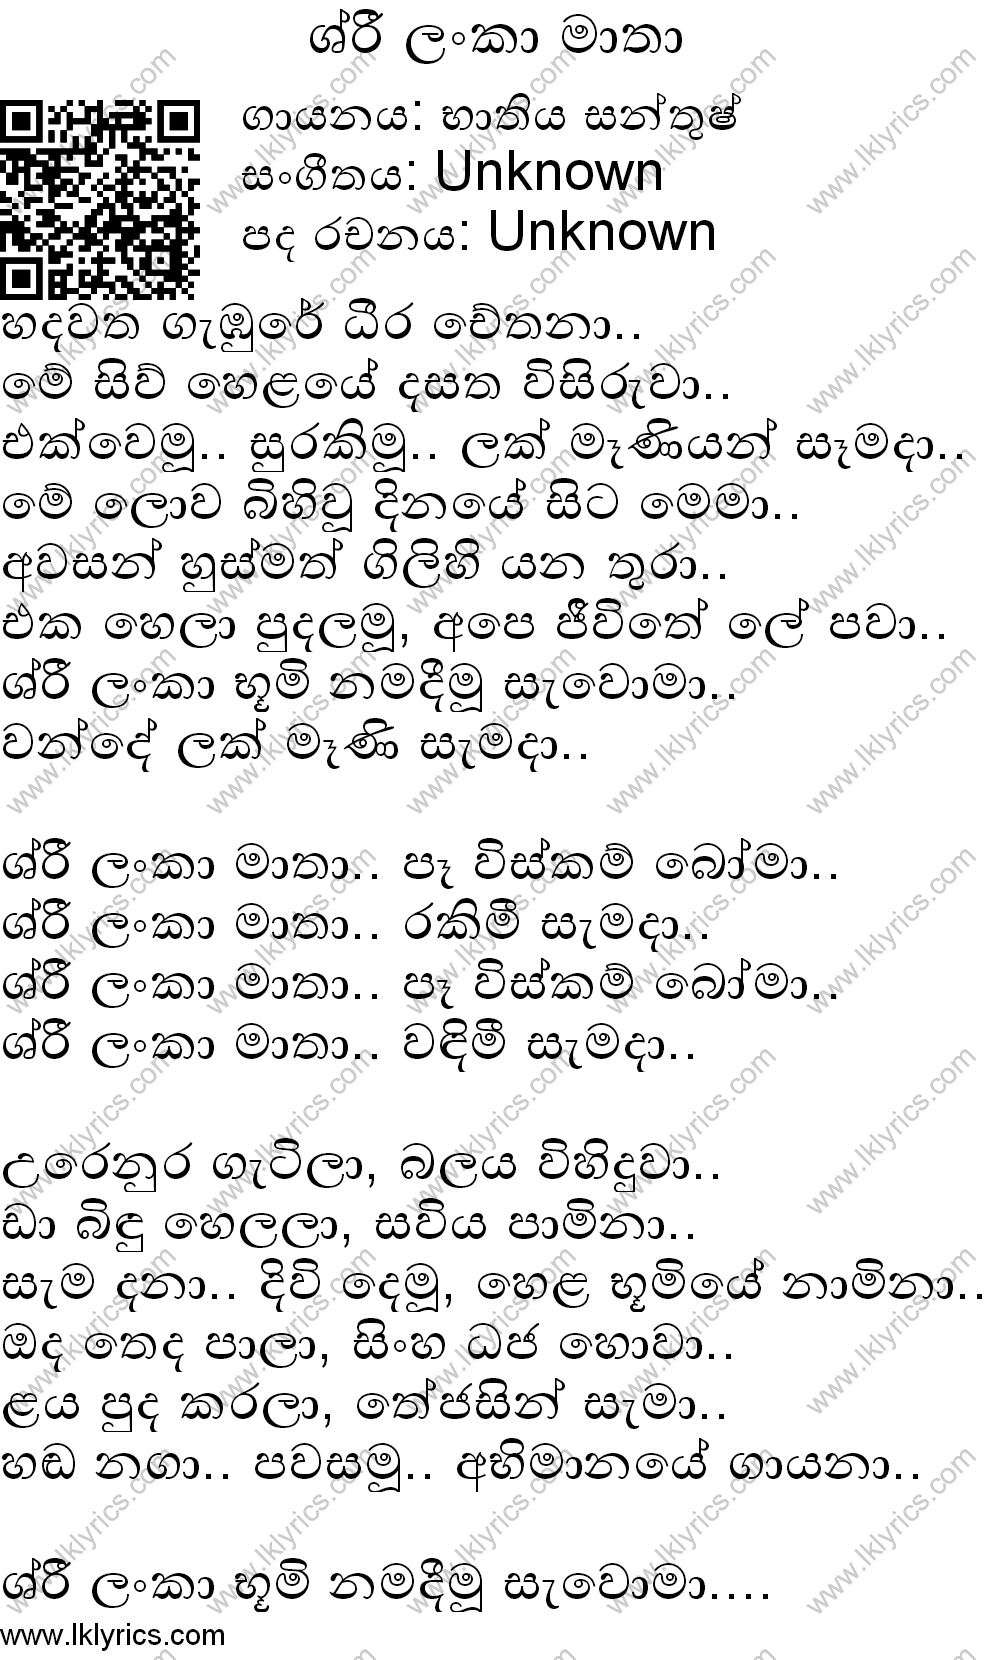 Old Sinhala Baila Songs Lyrics - Lyrics Center